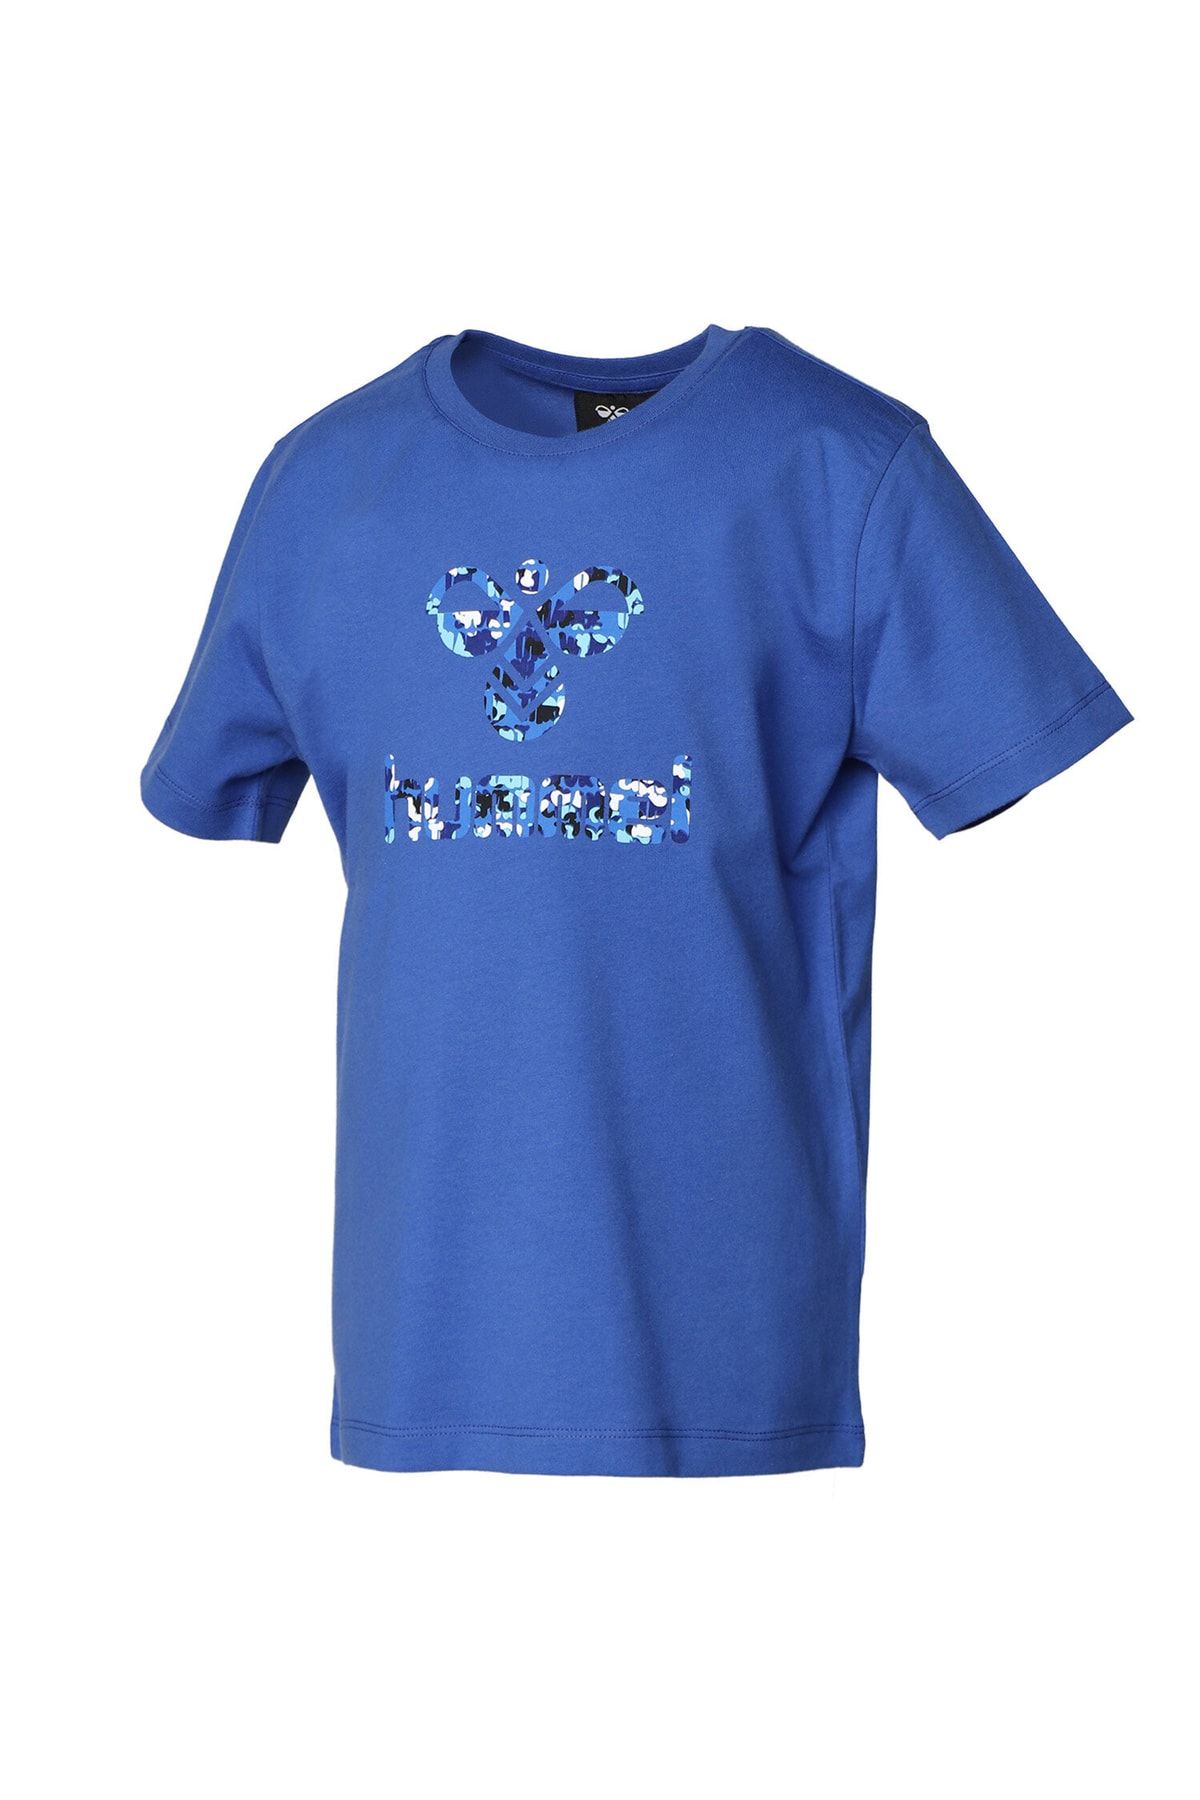 hummel Erkek Çocuk Gaiman Mavi T-shirt 911656-7837